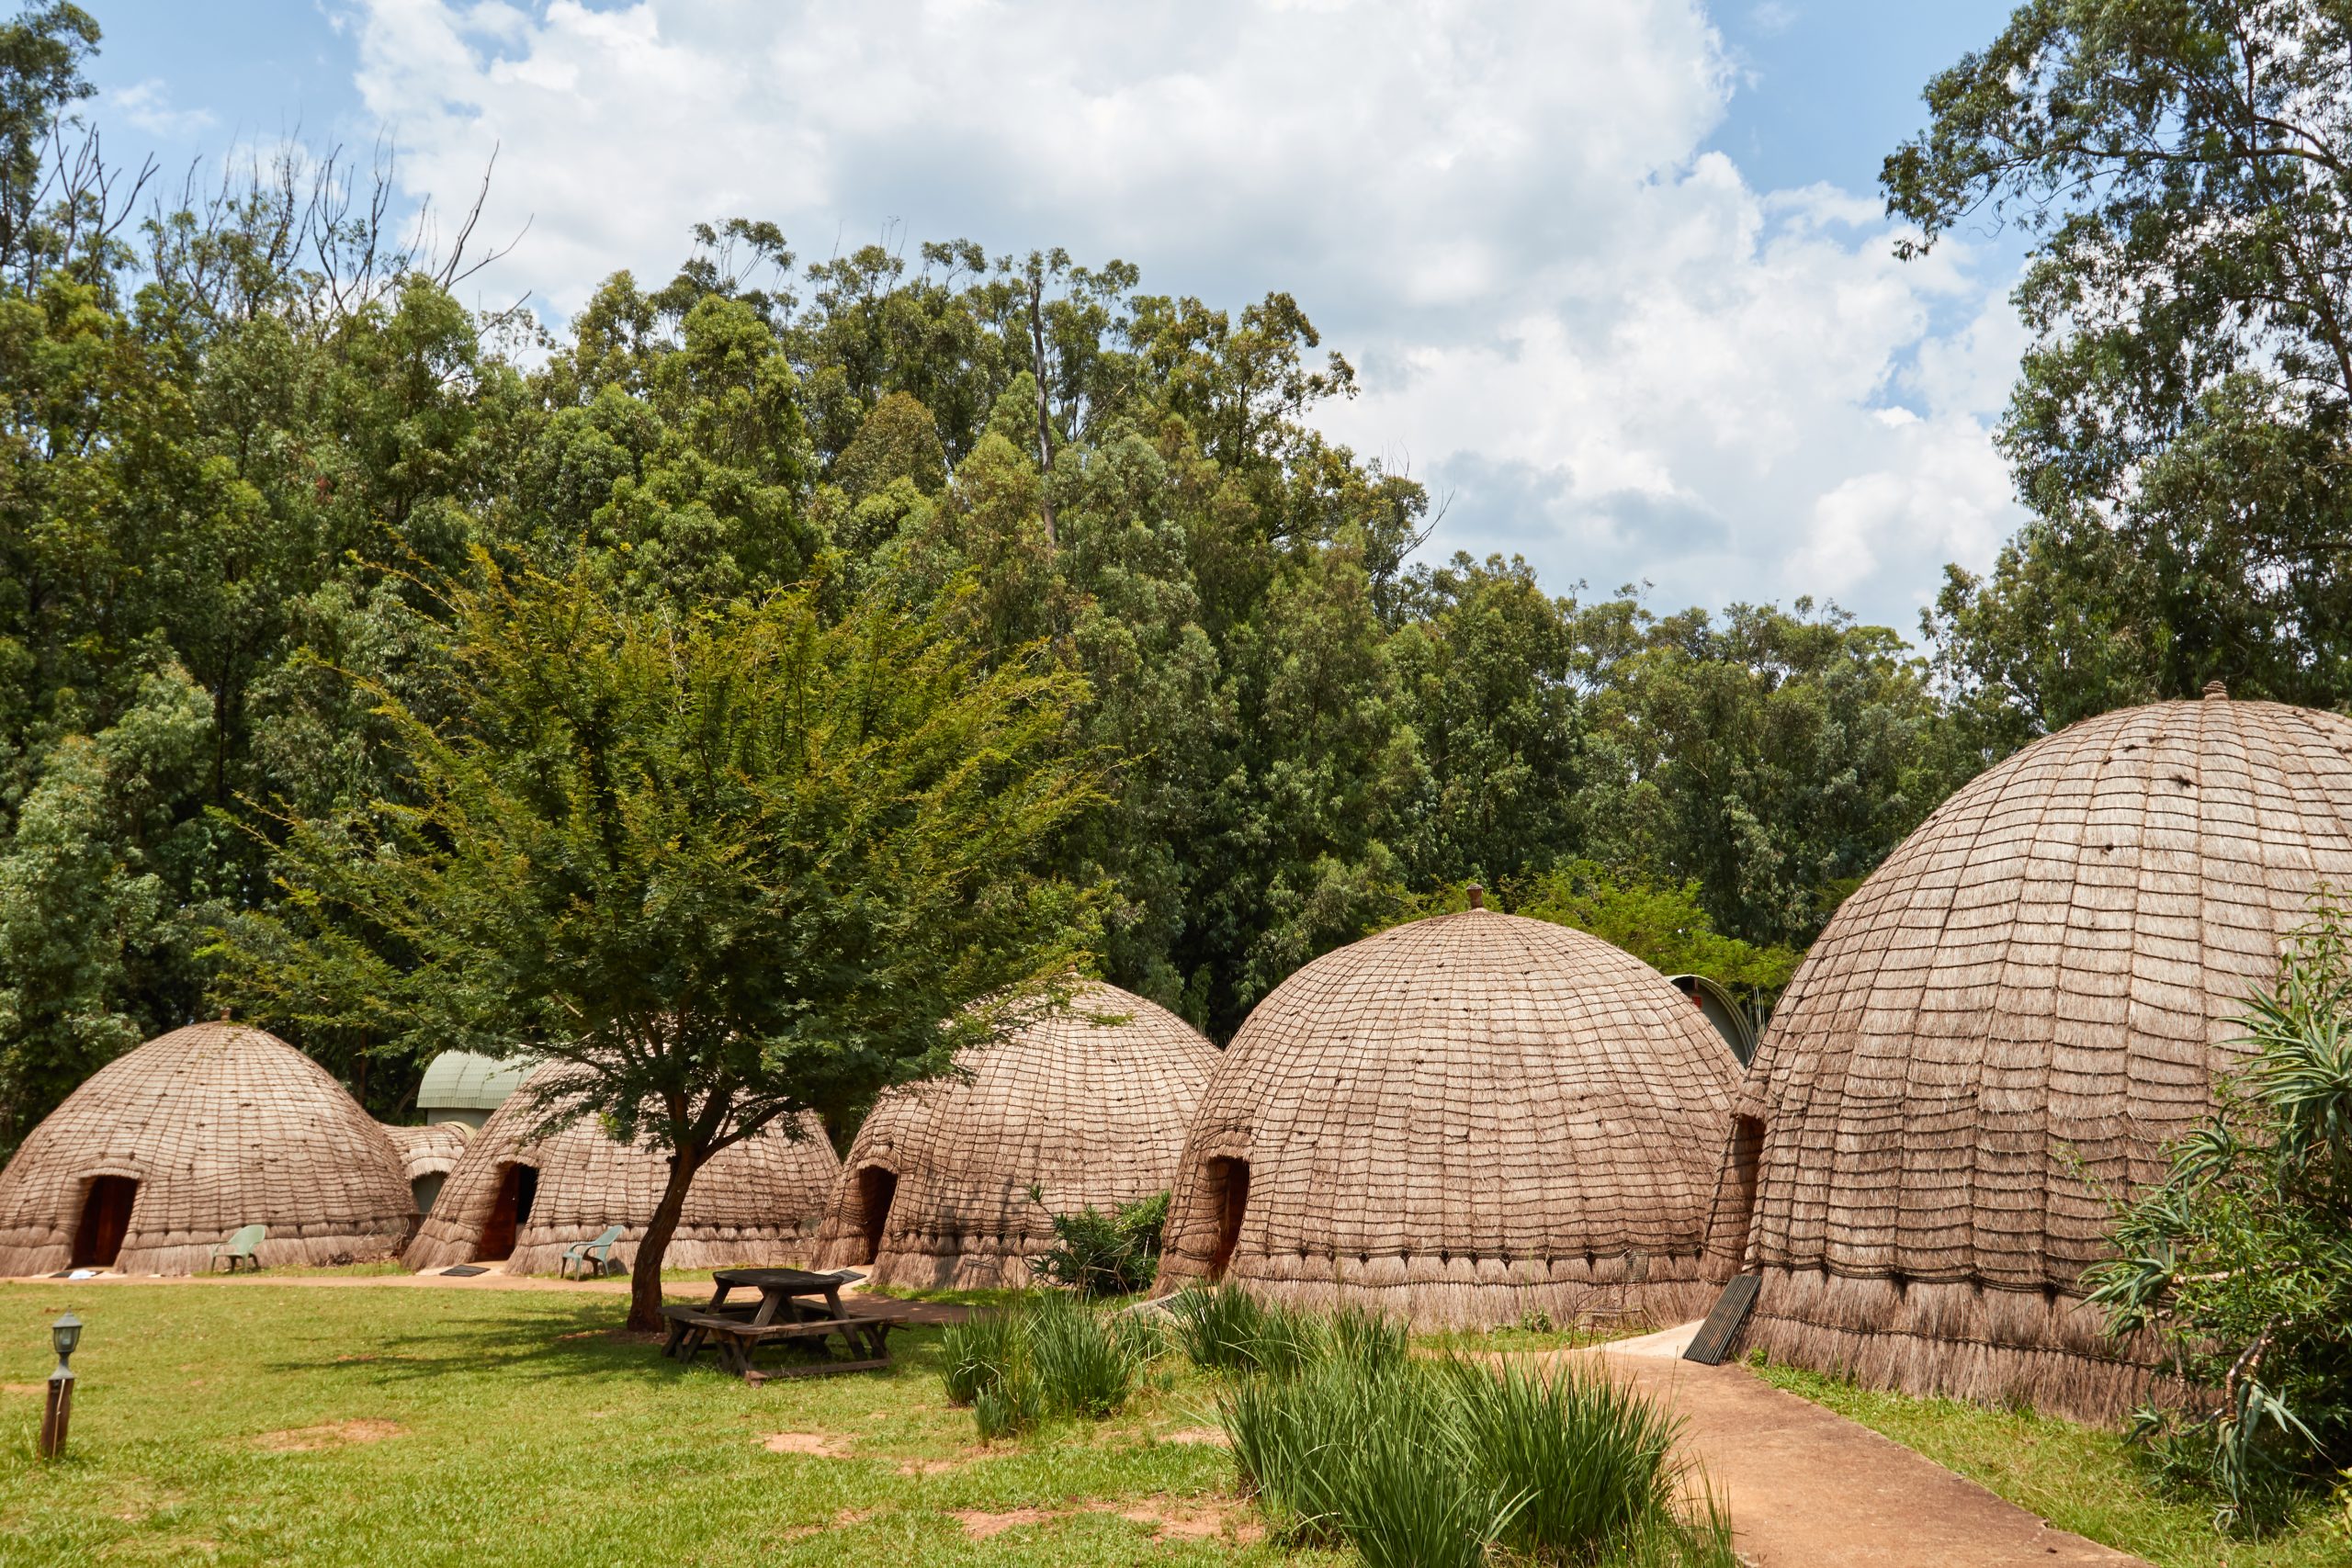 Traditional beehive huts in Eswatini